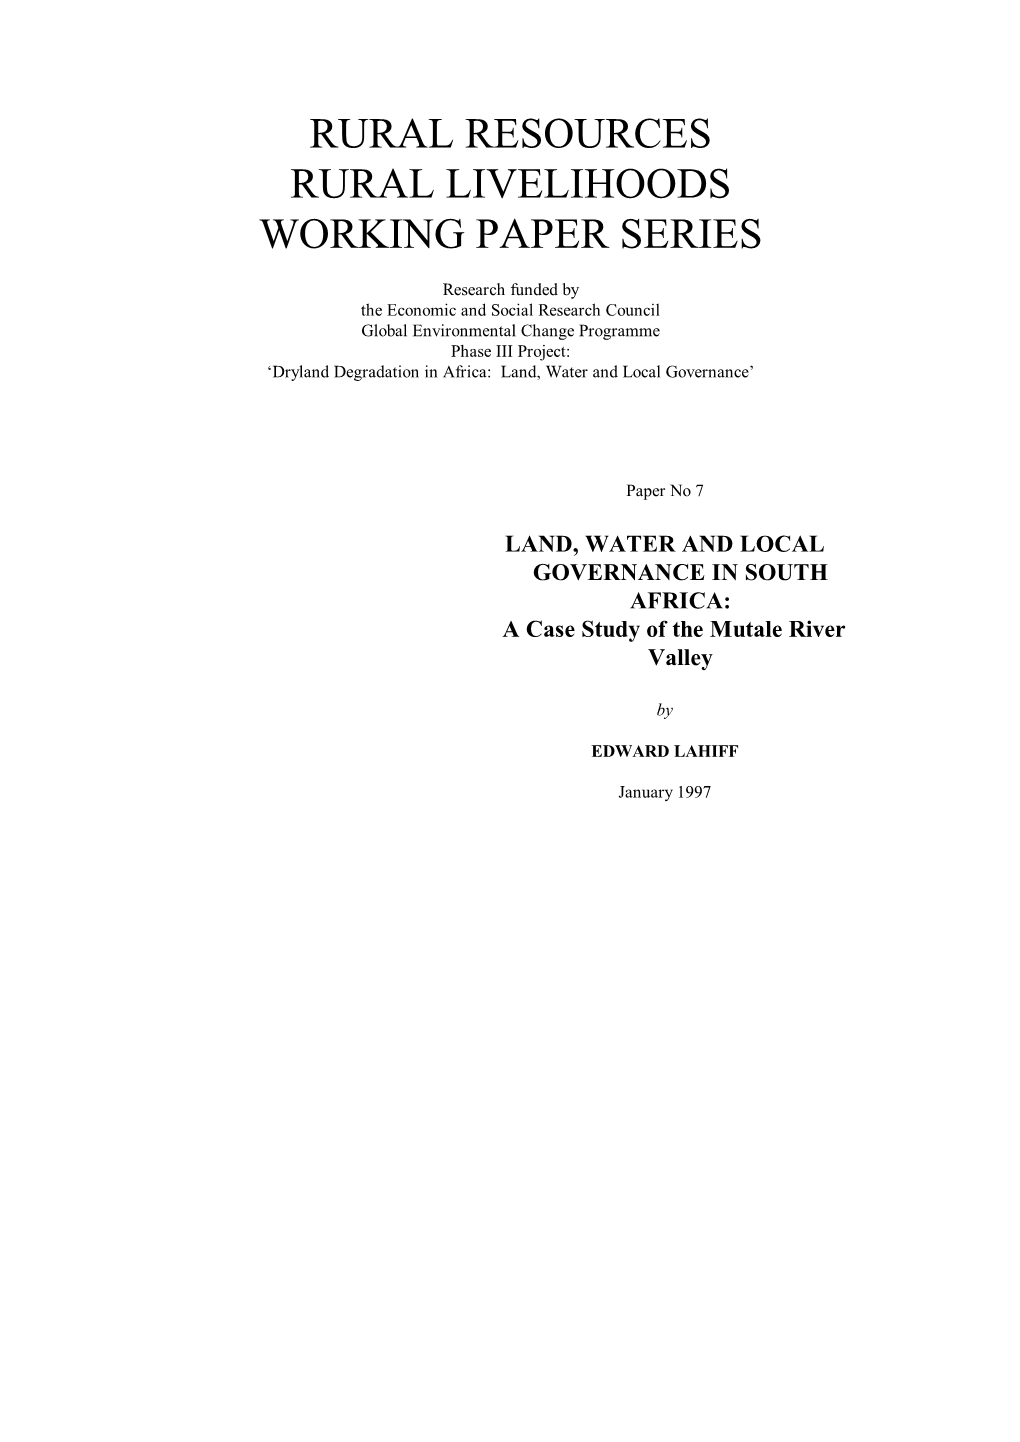 Rural Resources Rural Livelihoods Working Paper Series